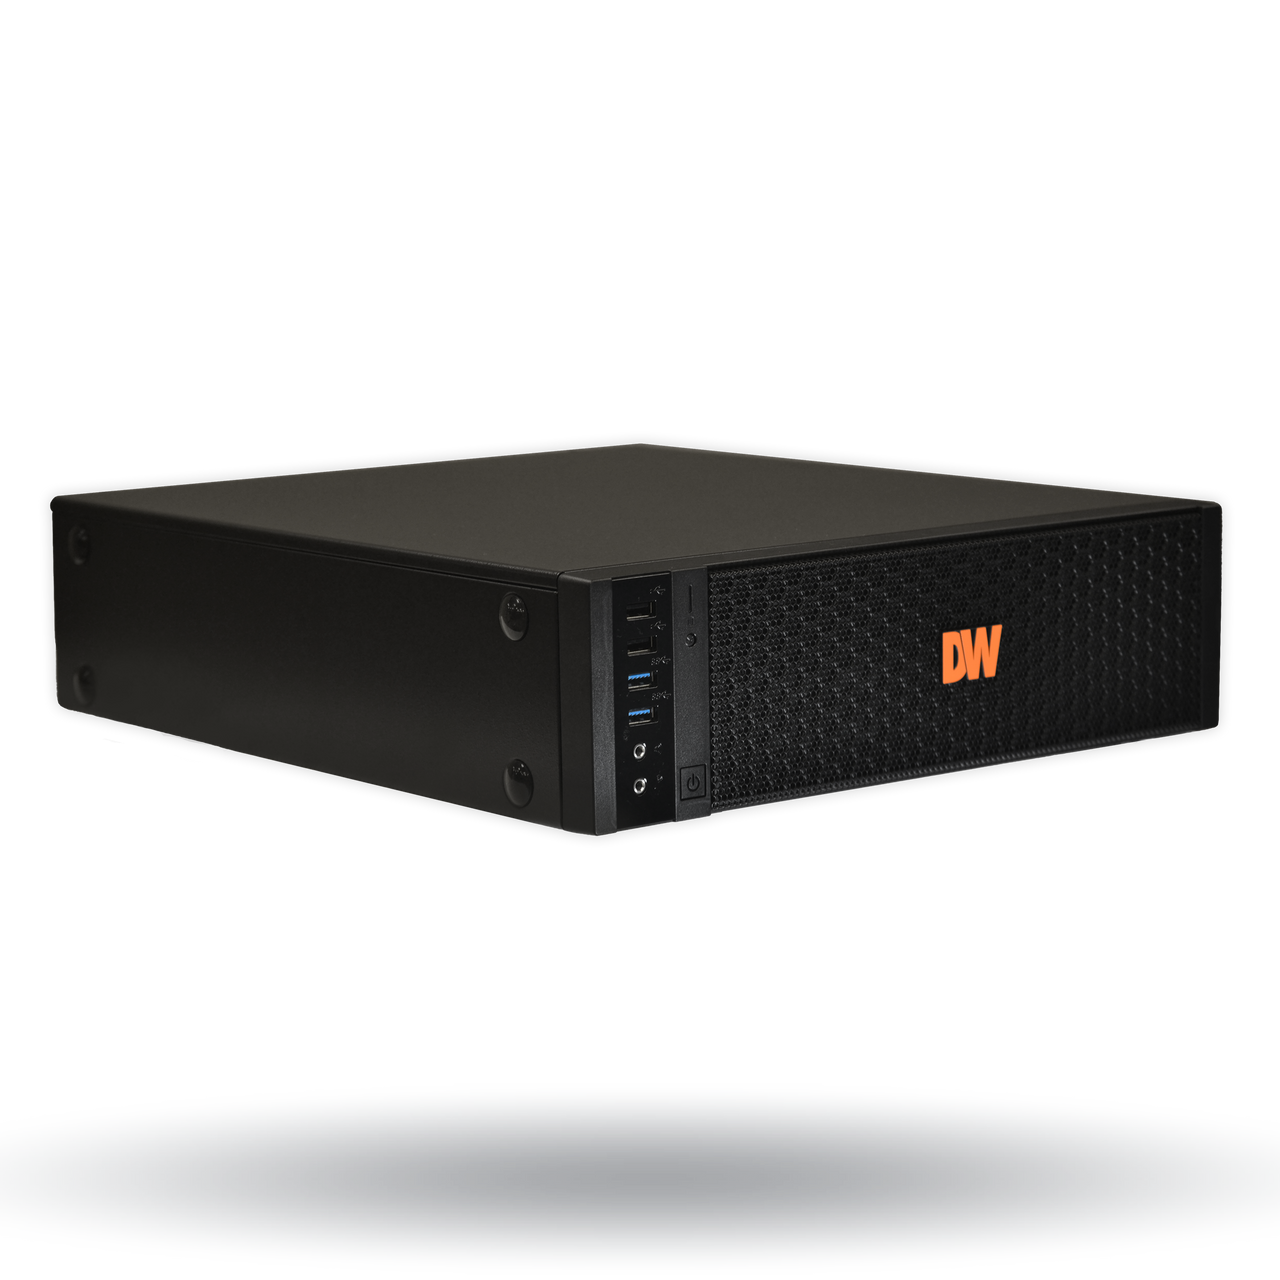 Digital Watchdog DW-BJDX3112T-LX 180Mbps Desktop Video Server, i3 CPU, Linux Ubuntu OS, 12TB HDD, NDAA Compliant